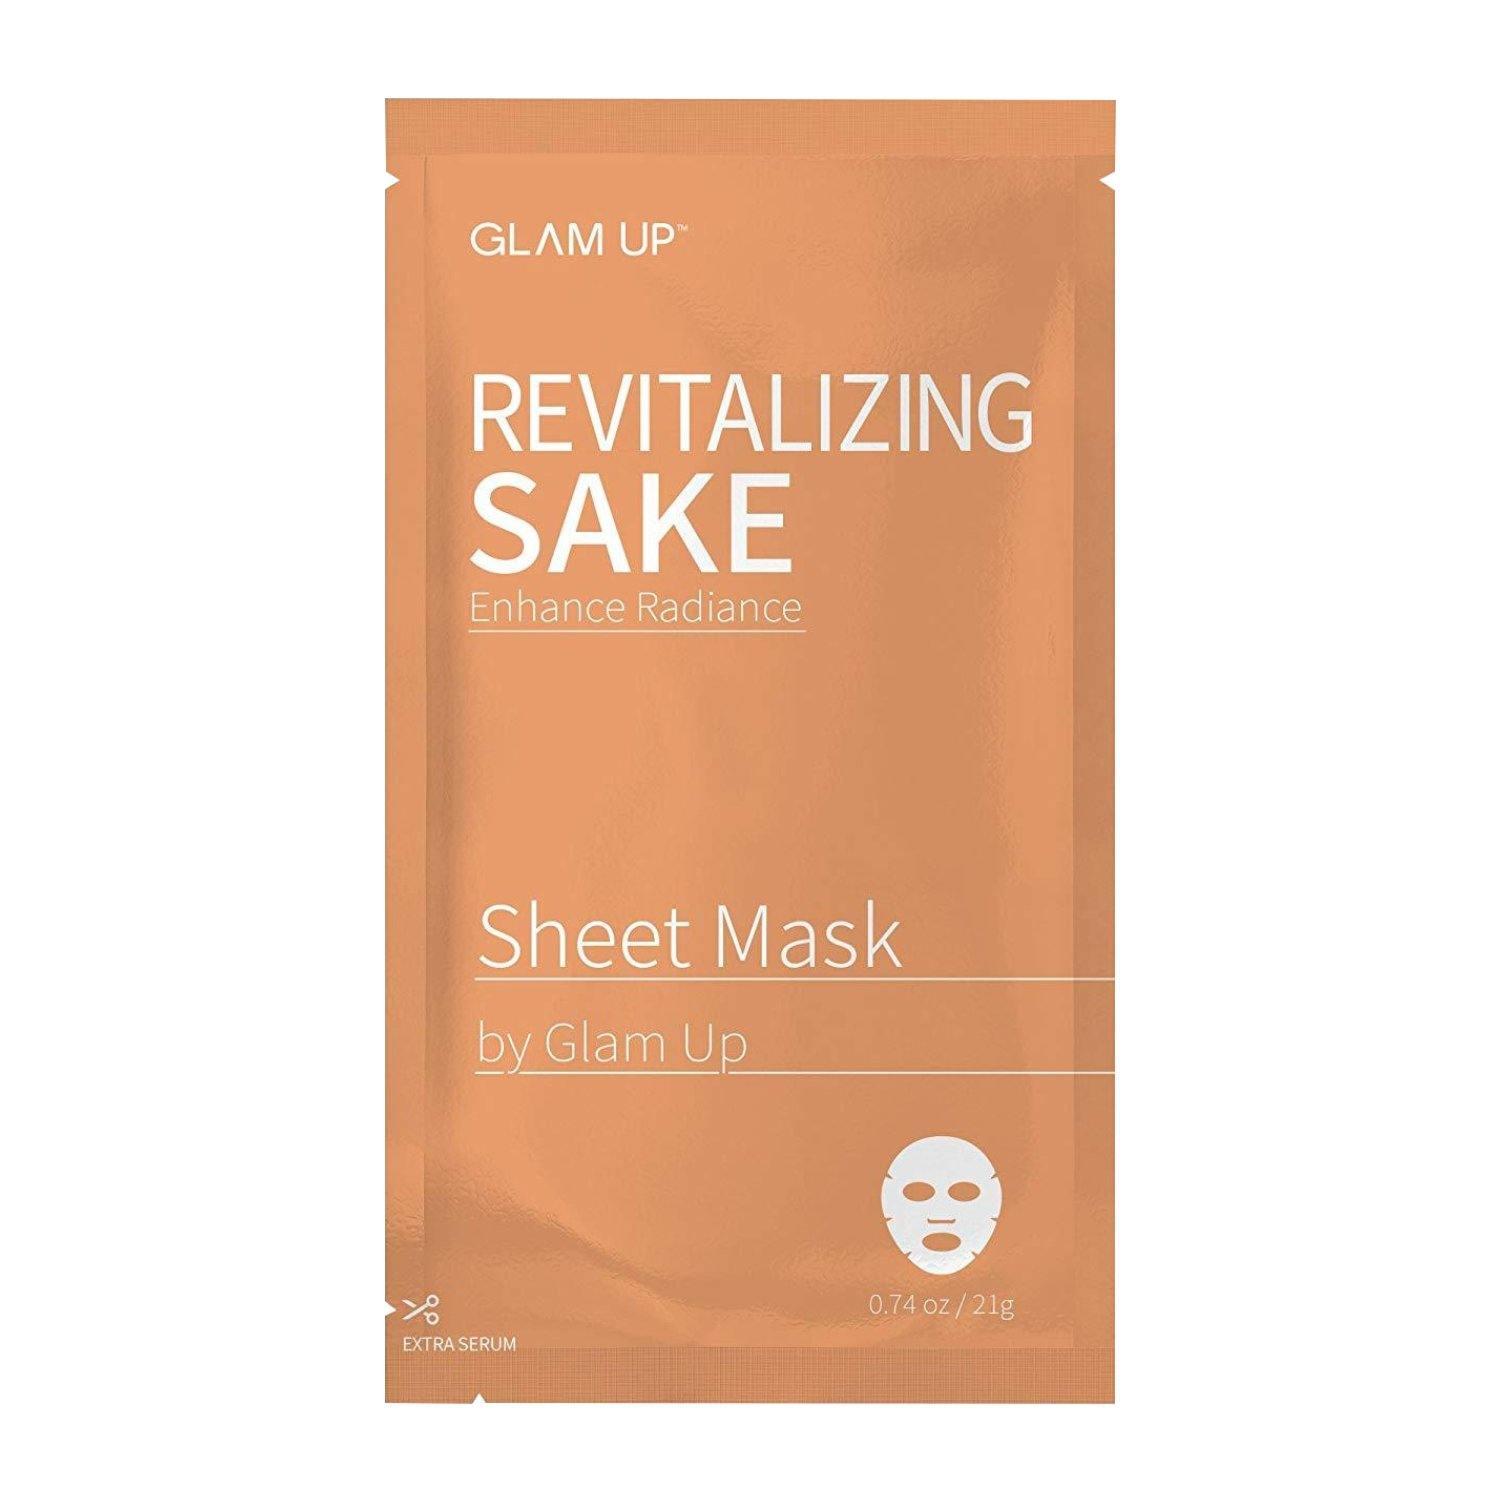 Revitalizing Sake (Japanese Rice) Sheet Mask